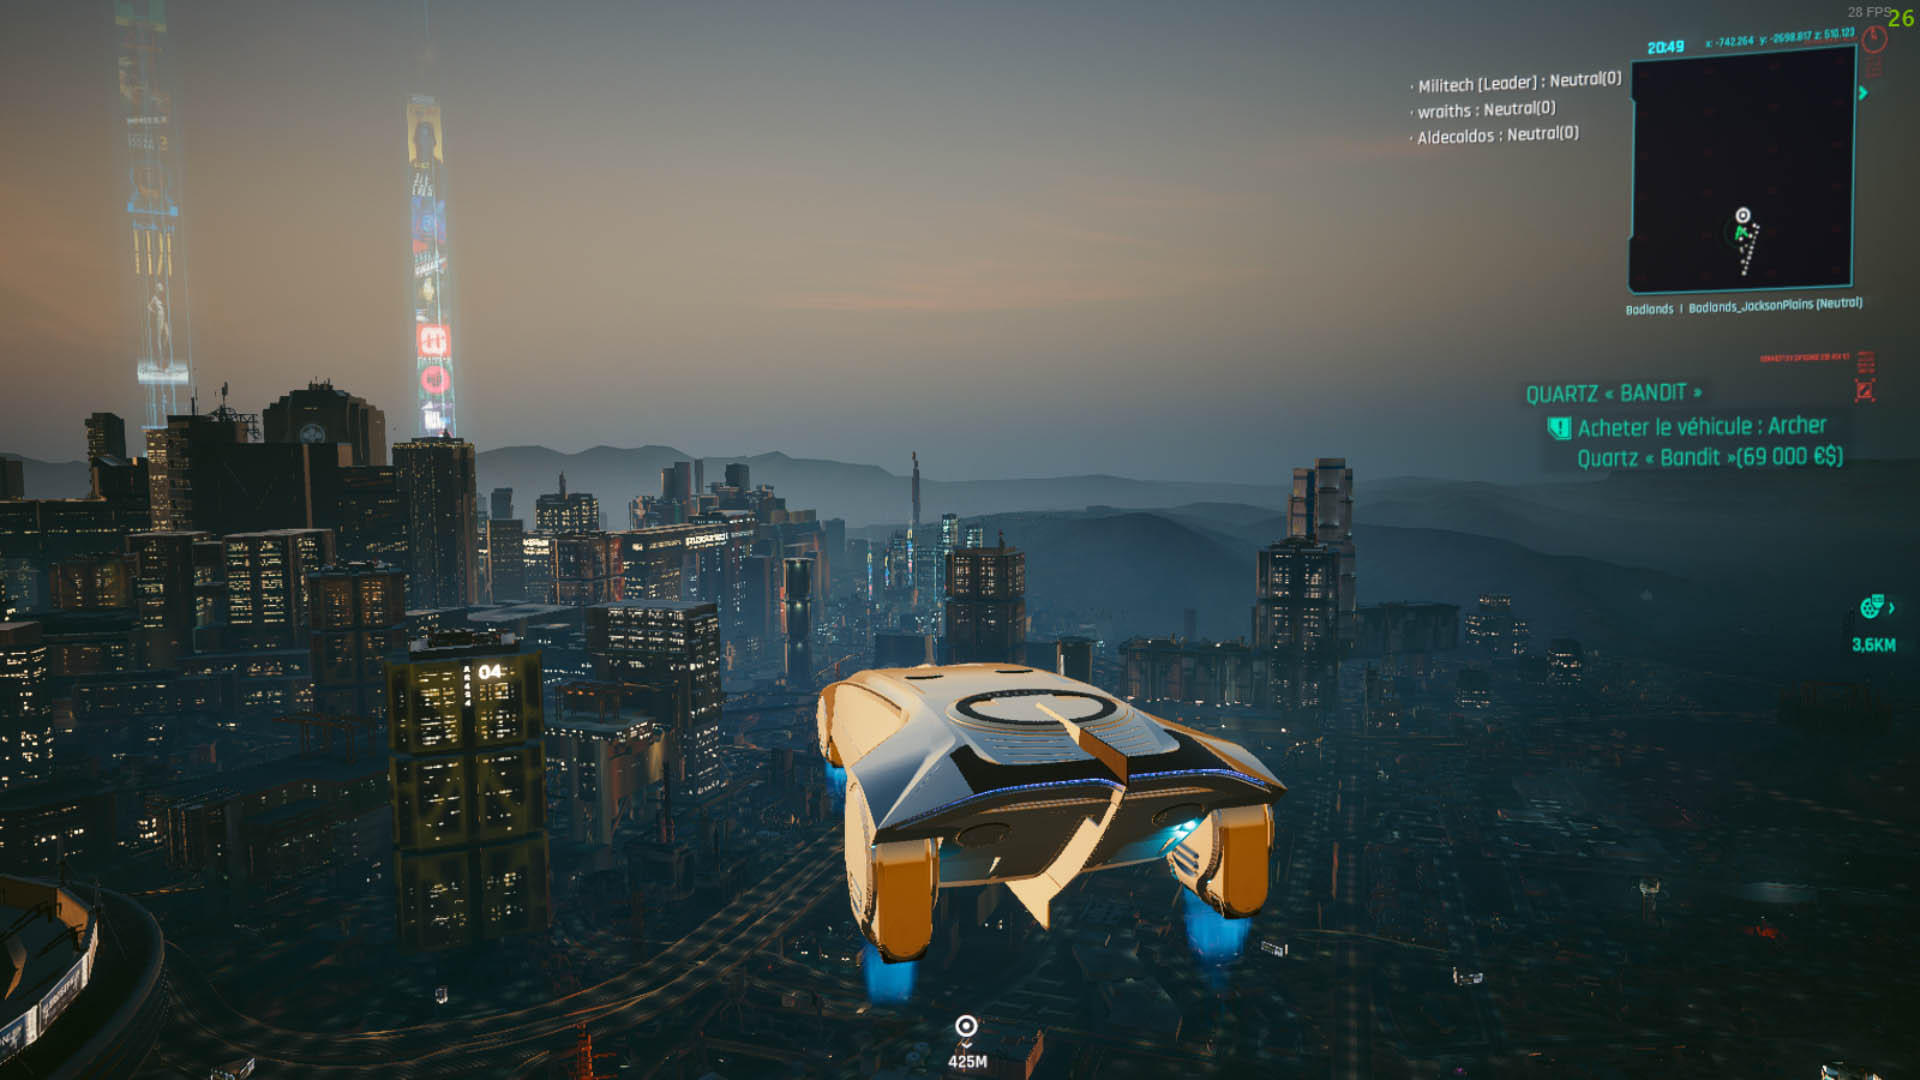 Фанатский мод добавил в Cyberpunk 2077 наземное и воздушное такси